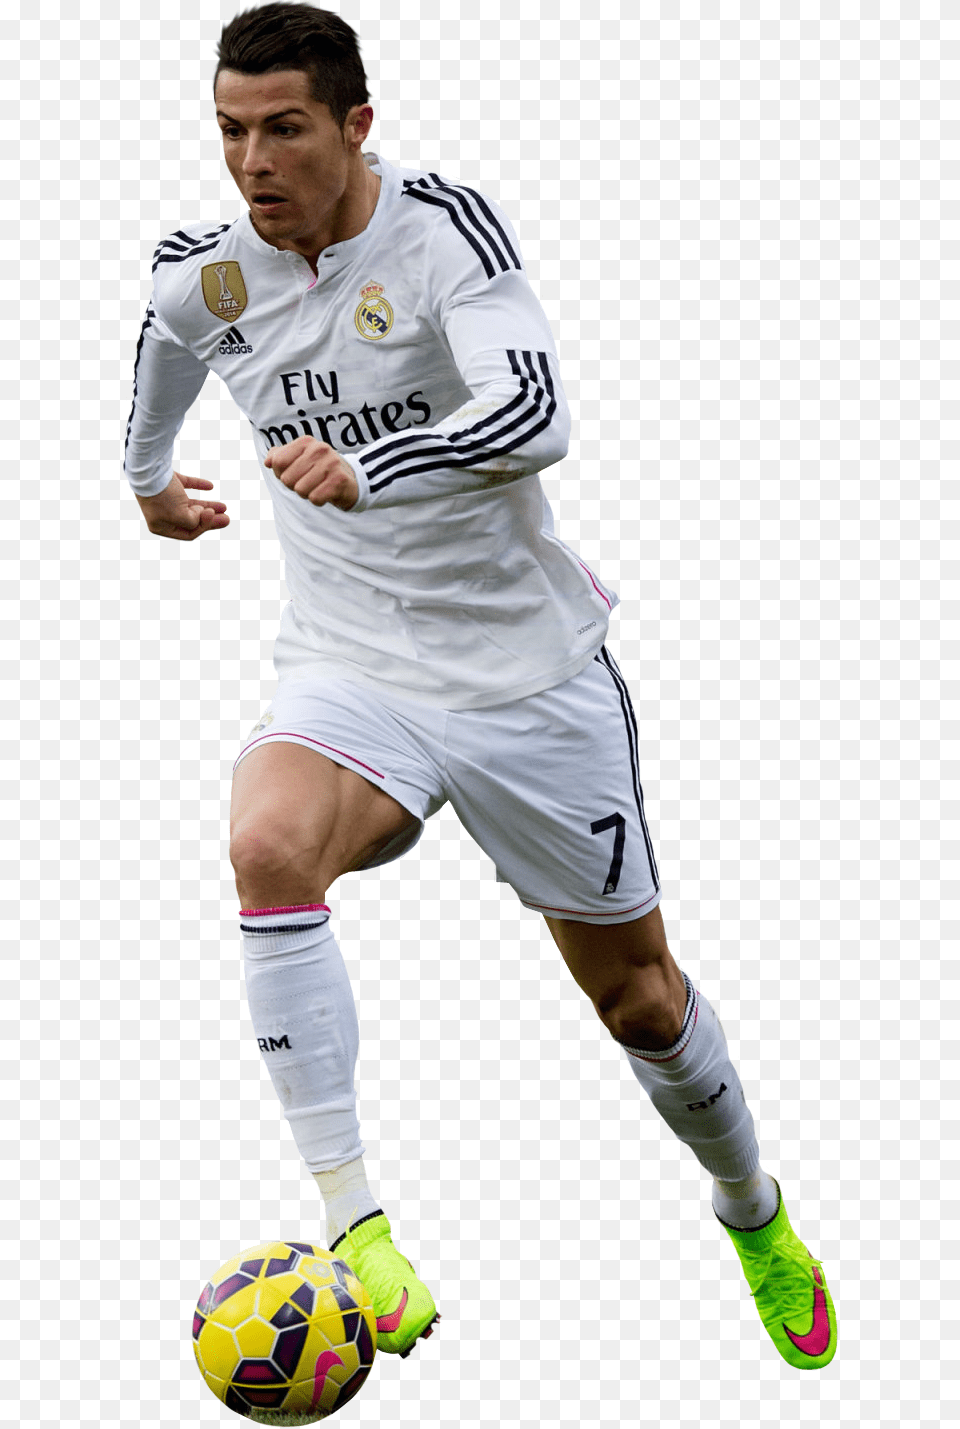 Cristiano Ronaldo Render Cristiano Ronaldo White Background, Sport, Ball, Soccer Ball, Soccer Png Image